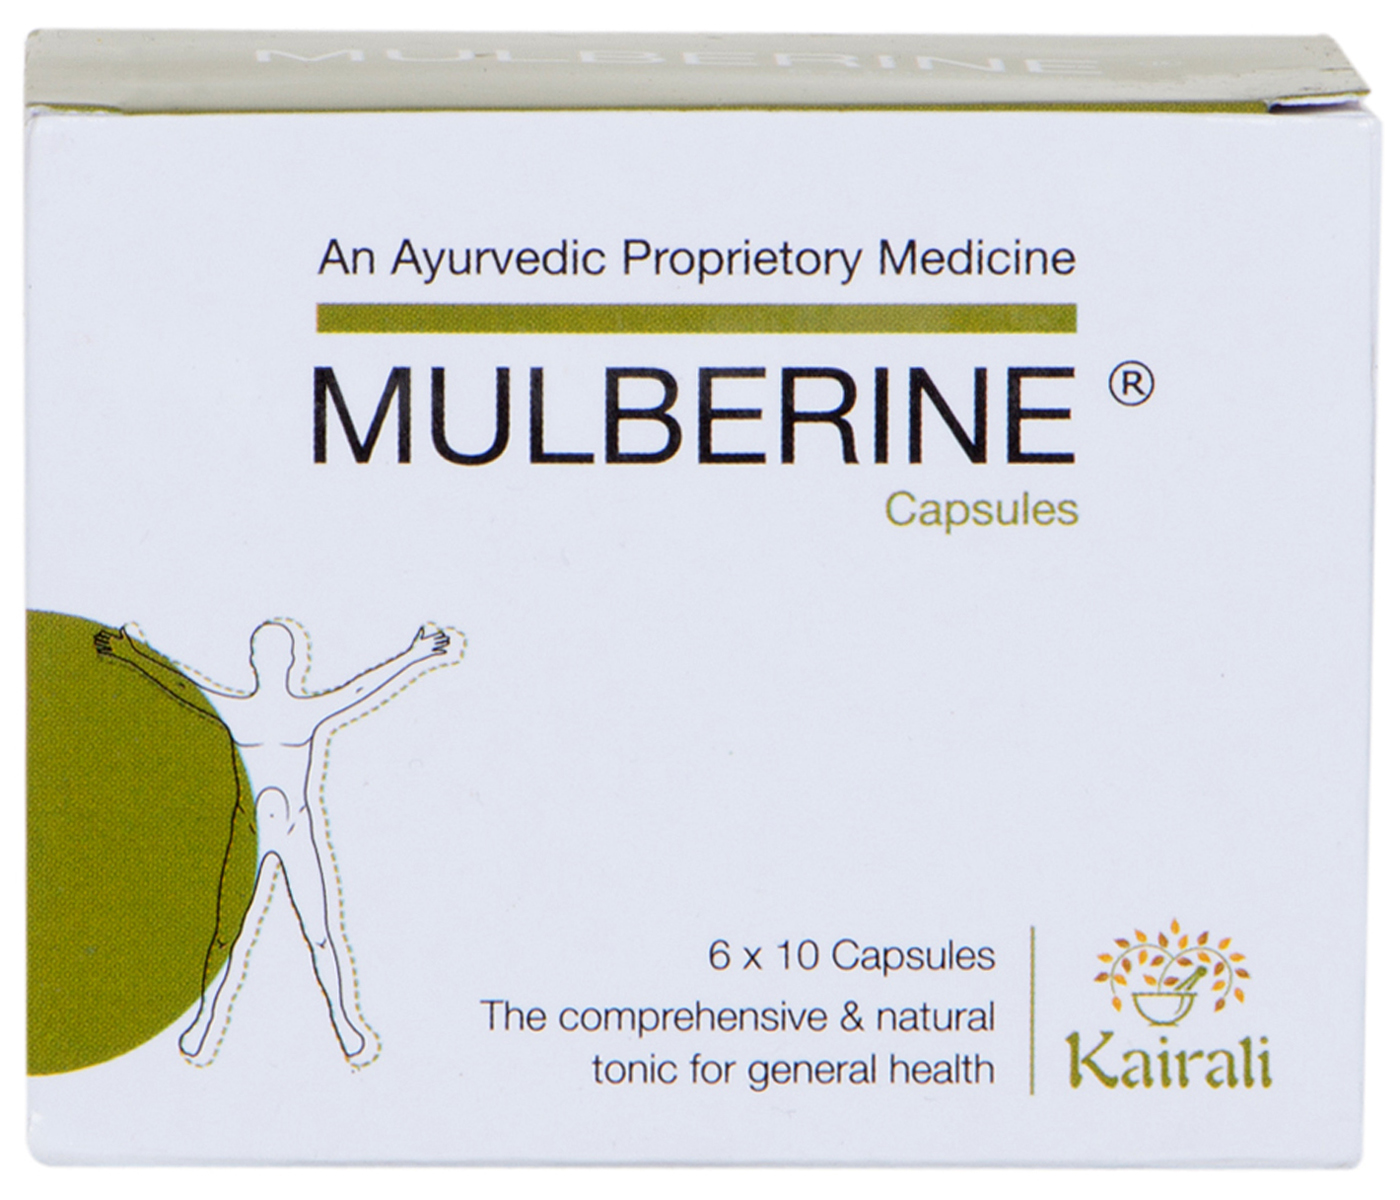 Buy Kairali Mulberine Capsule at Best Price Online